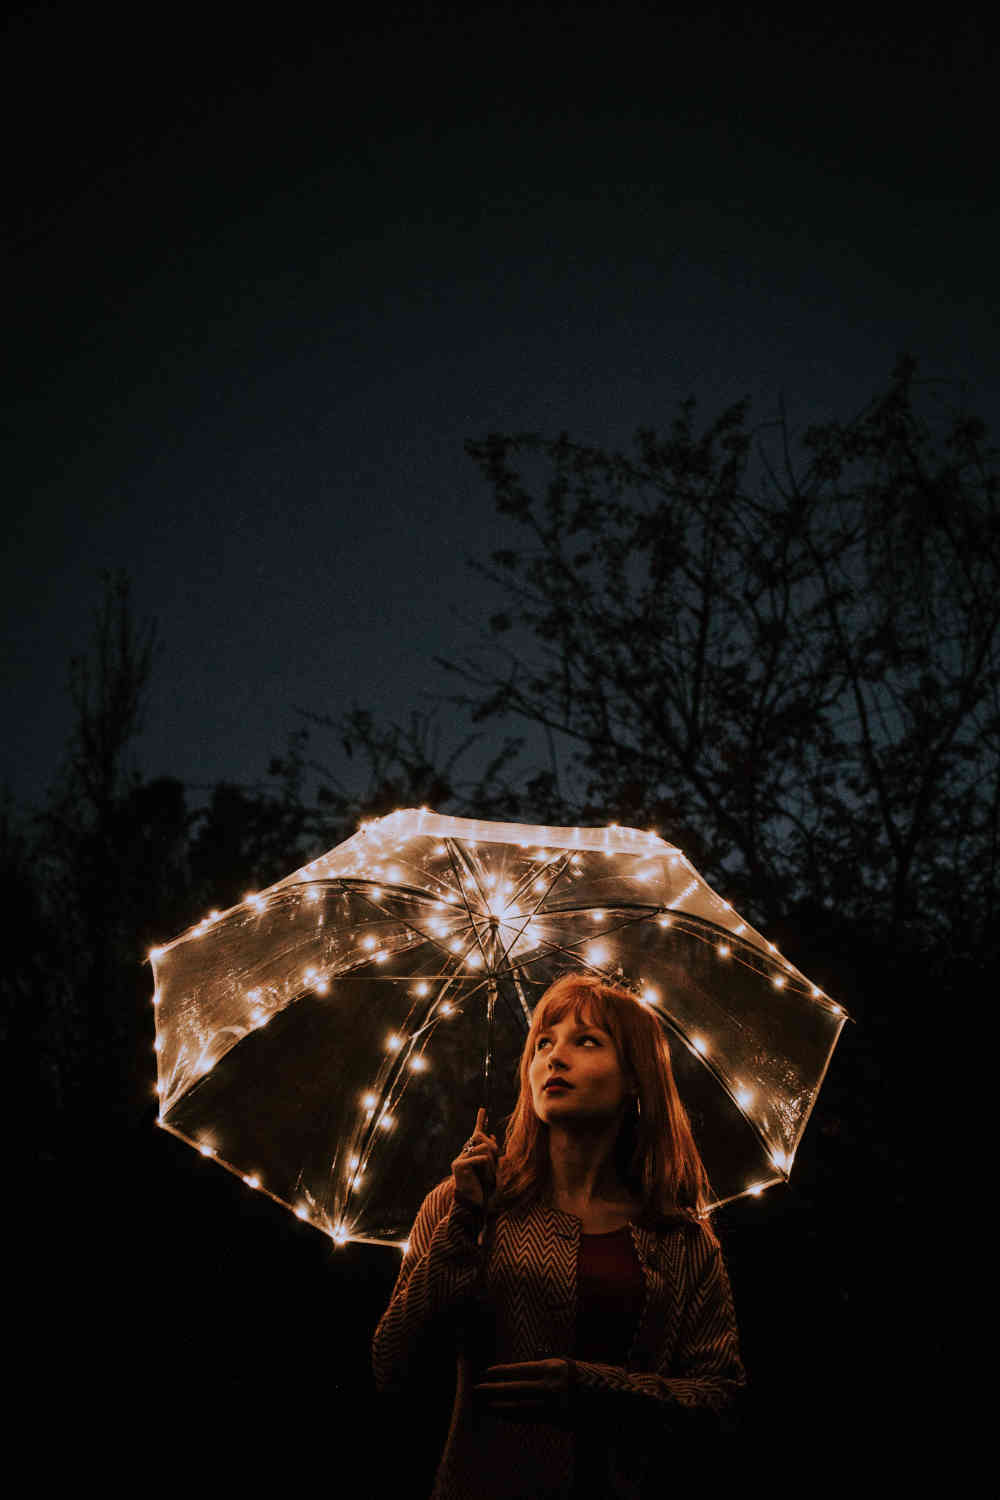 Woman amid darkness holding up an umbrella - that illuminates her from its many tiny lights.